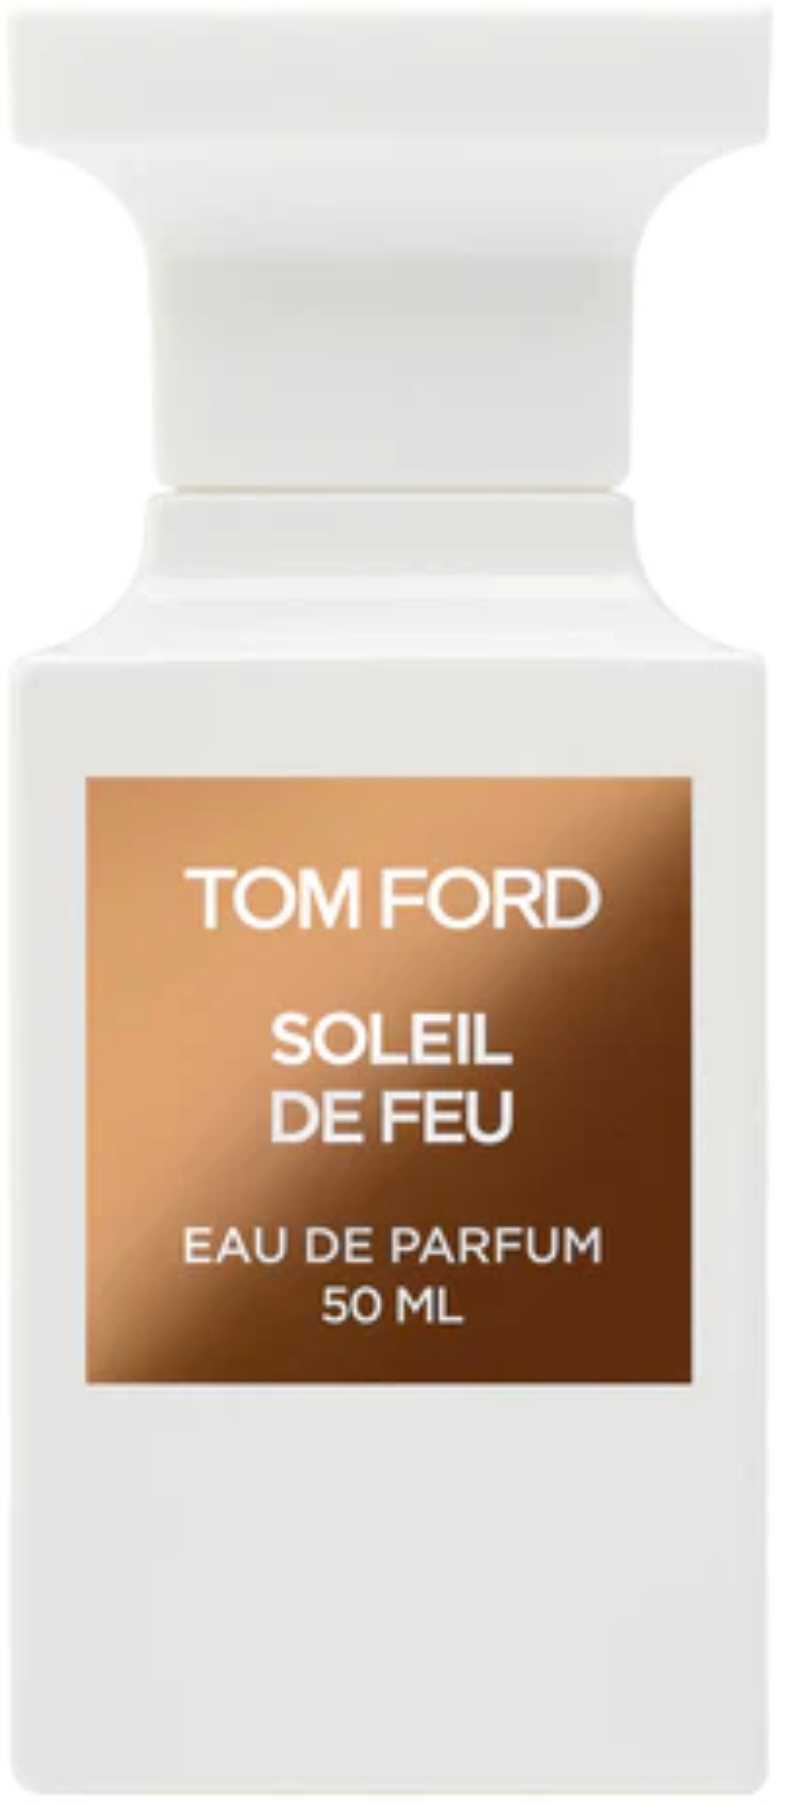 TOM FORD, Soleil de Feu Collection